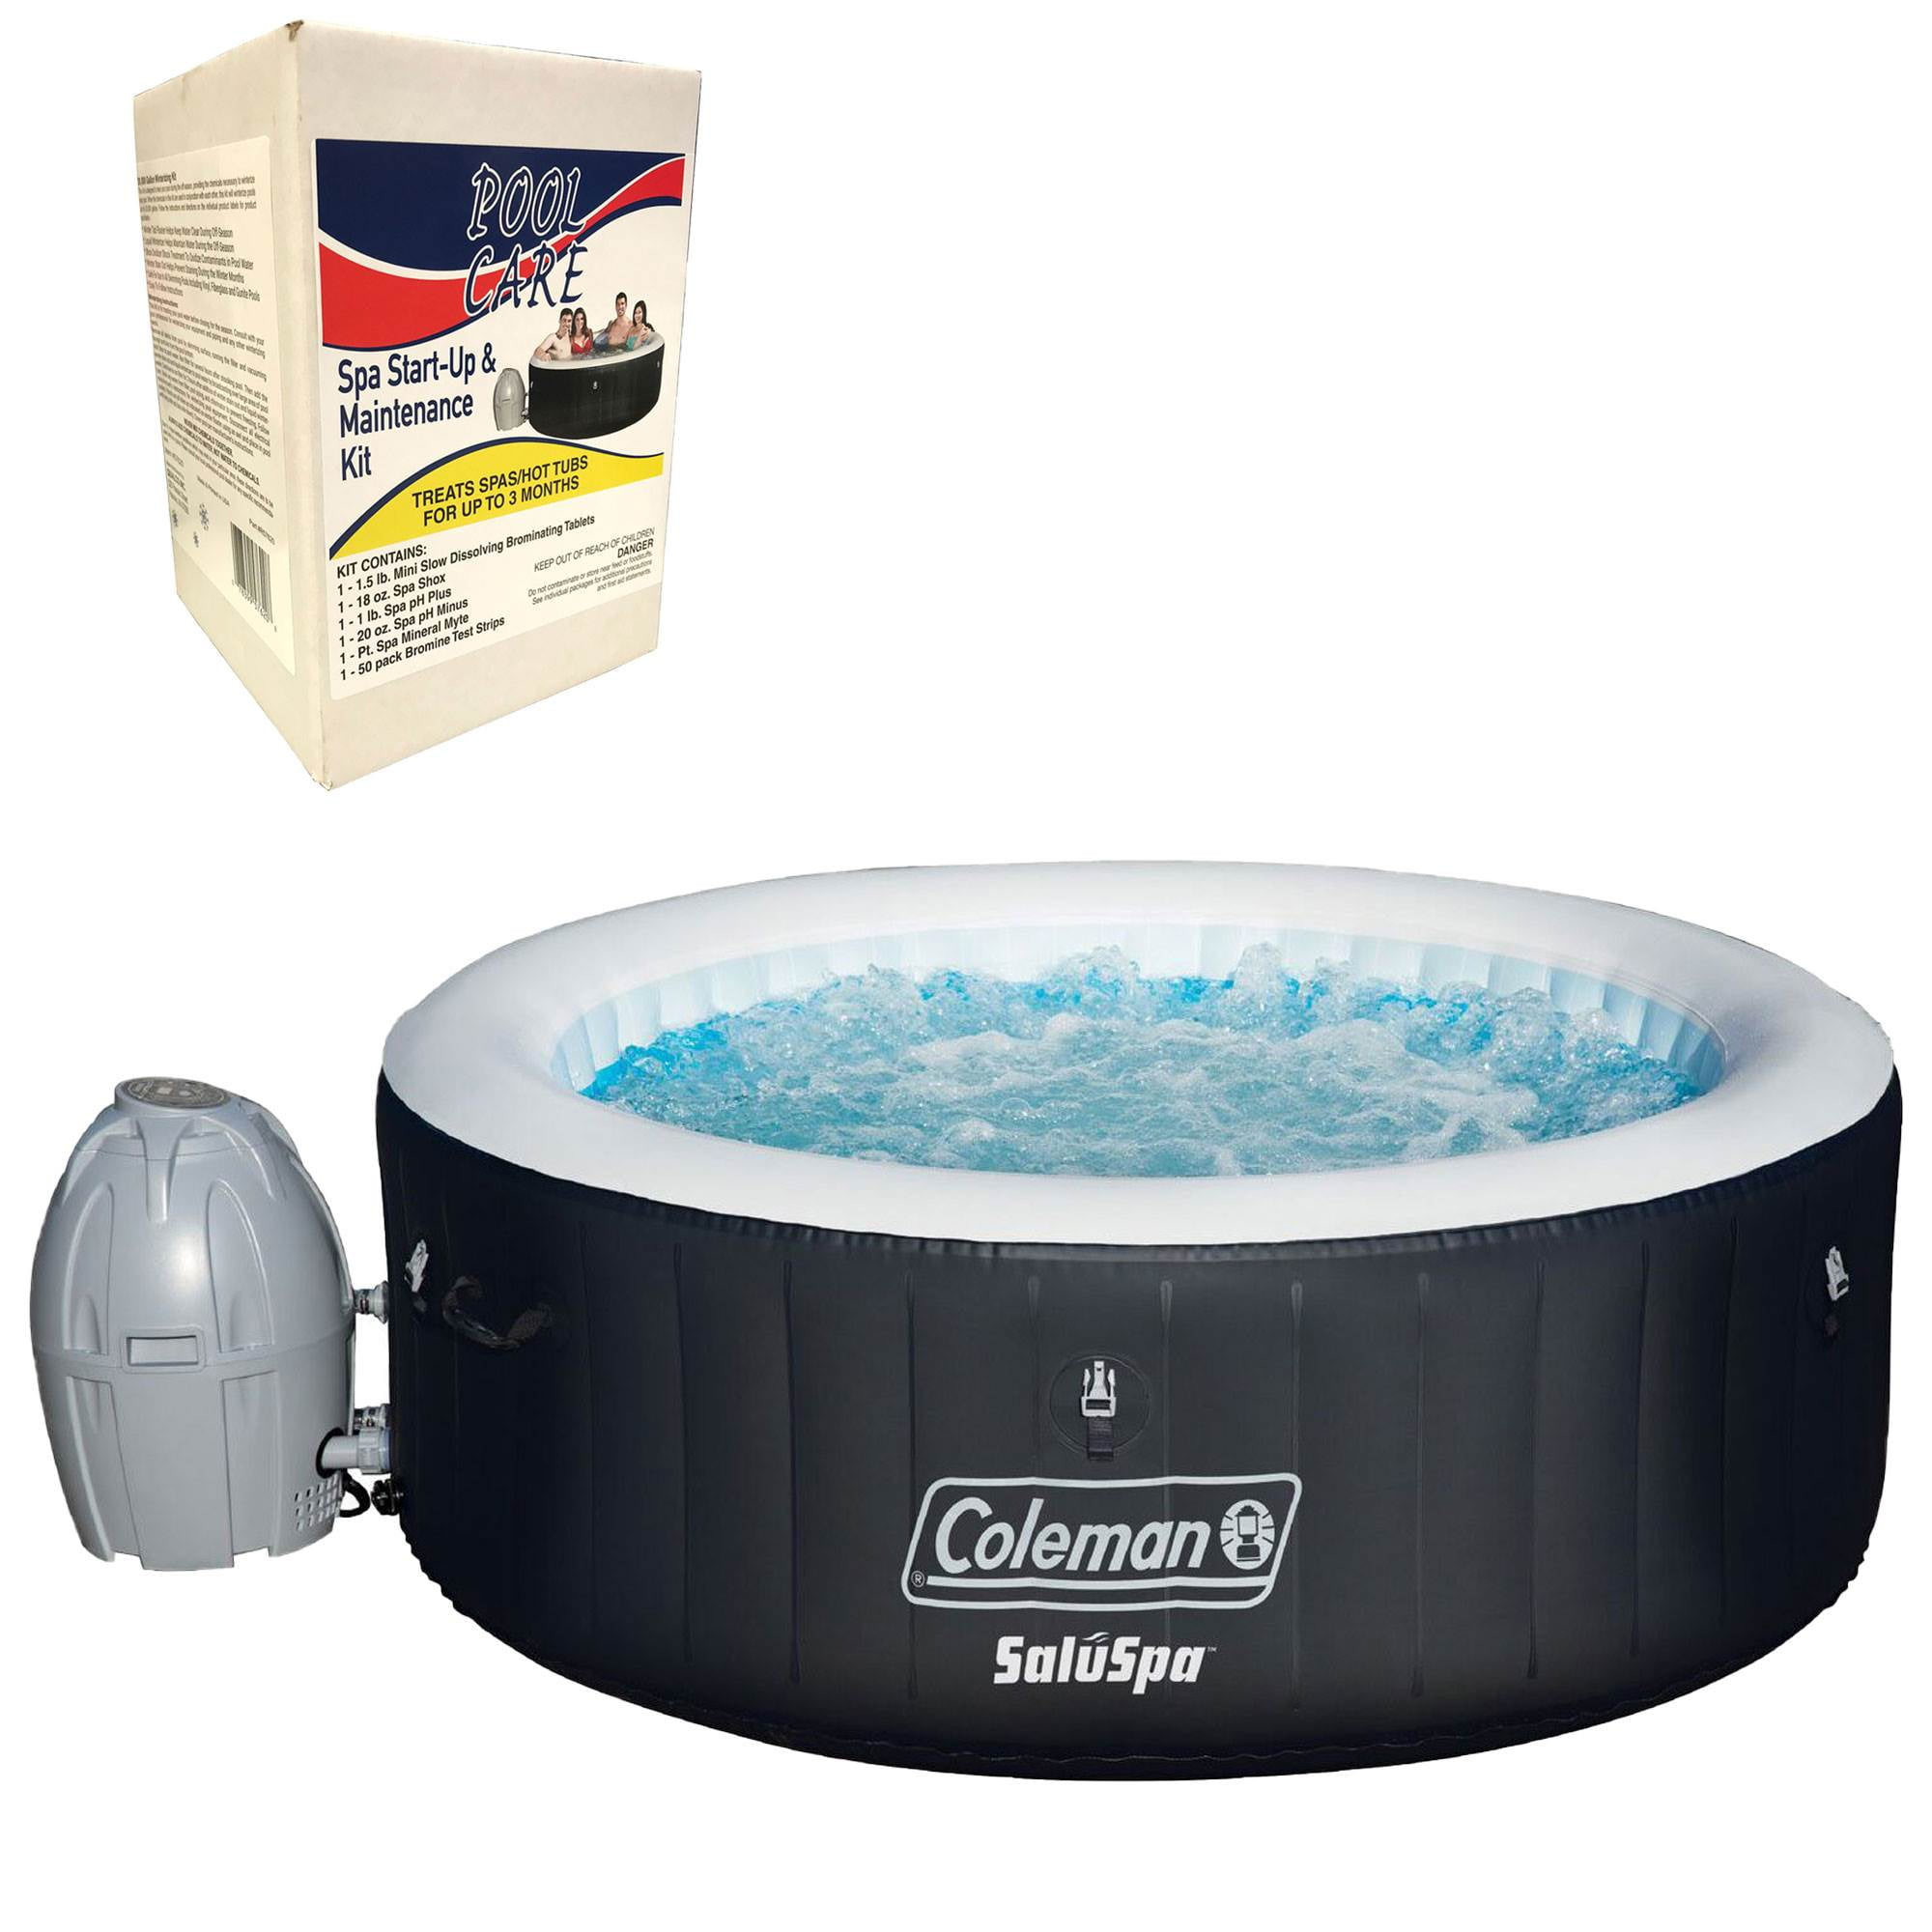 Coleman SaluSpa 4 Person Portable Inflatable Outdoor Hot Tub & Maintenance Kit 